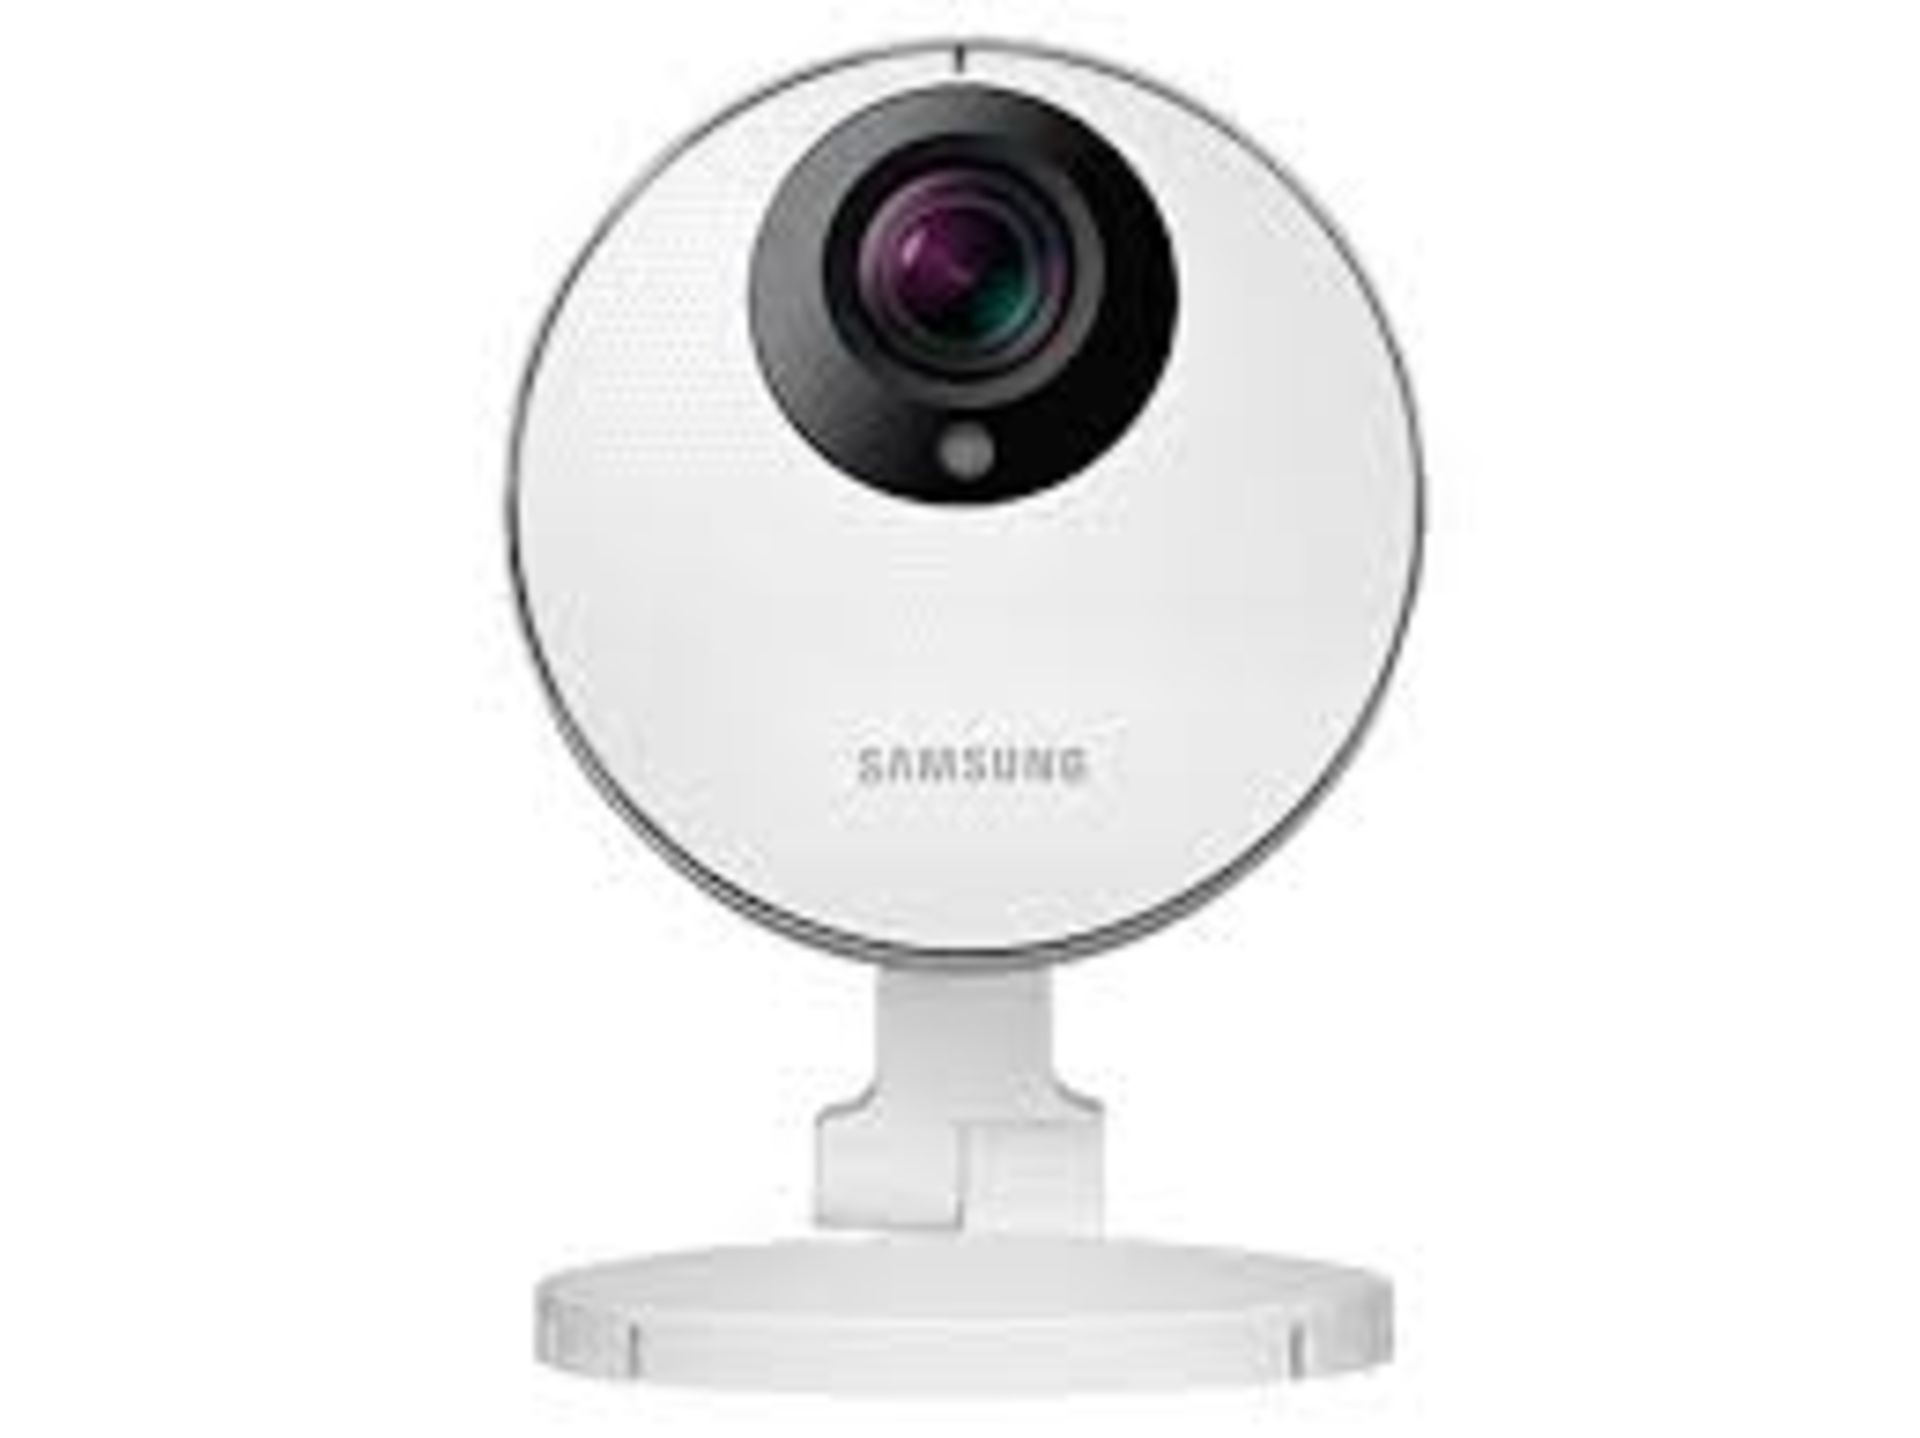 Boxed Samsung Smart Cam HD Pro 1080P Full HD WIFI Camera RRP £150